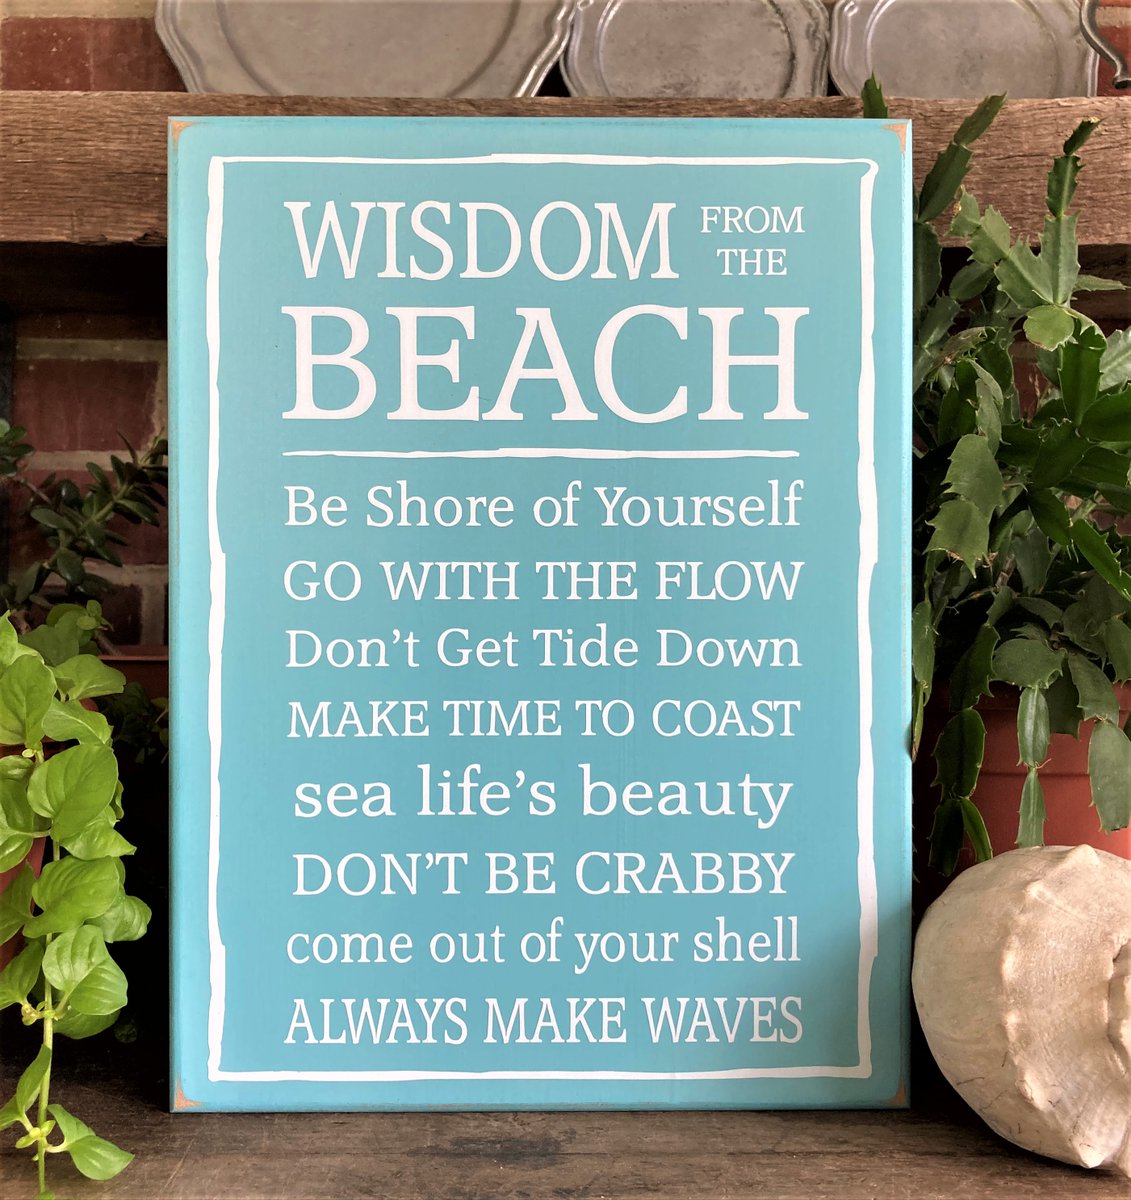 A few words of Wisdom from the Beach #Beachhouse #beachdecor #smilett23 #needtoknow #cwsigns #marylandmaker countryworkshop.net/products/wisdo…